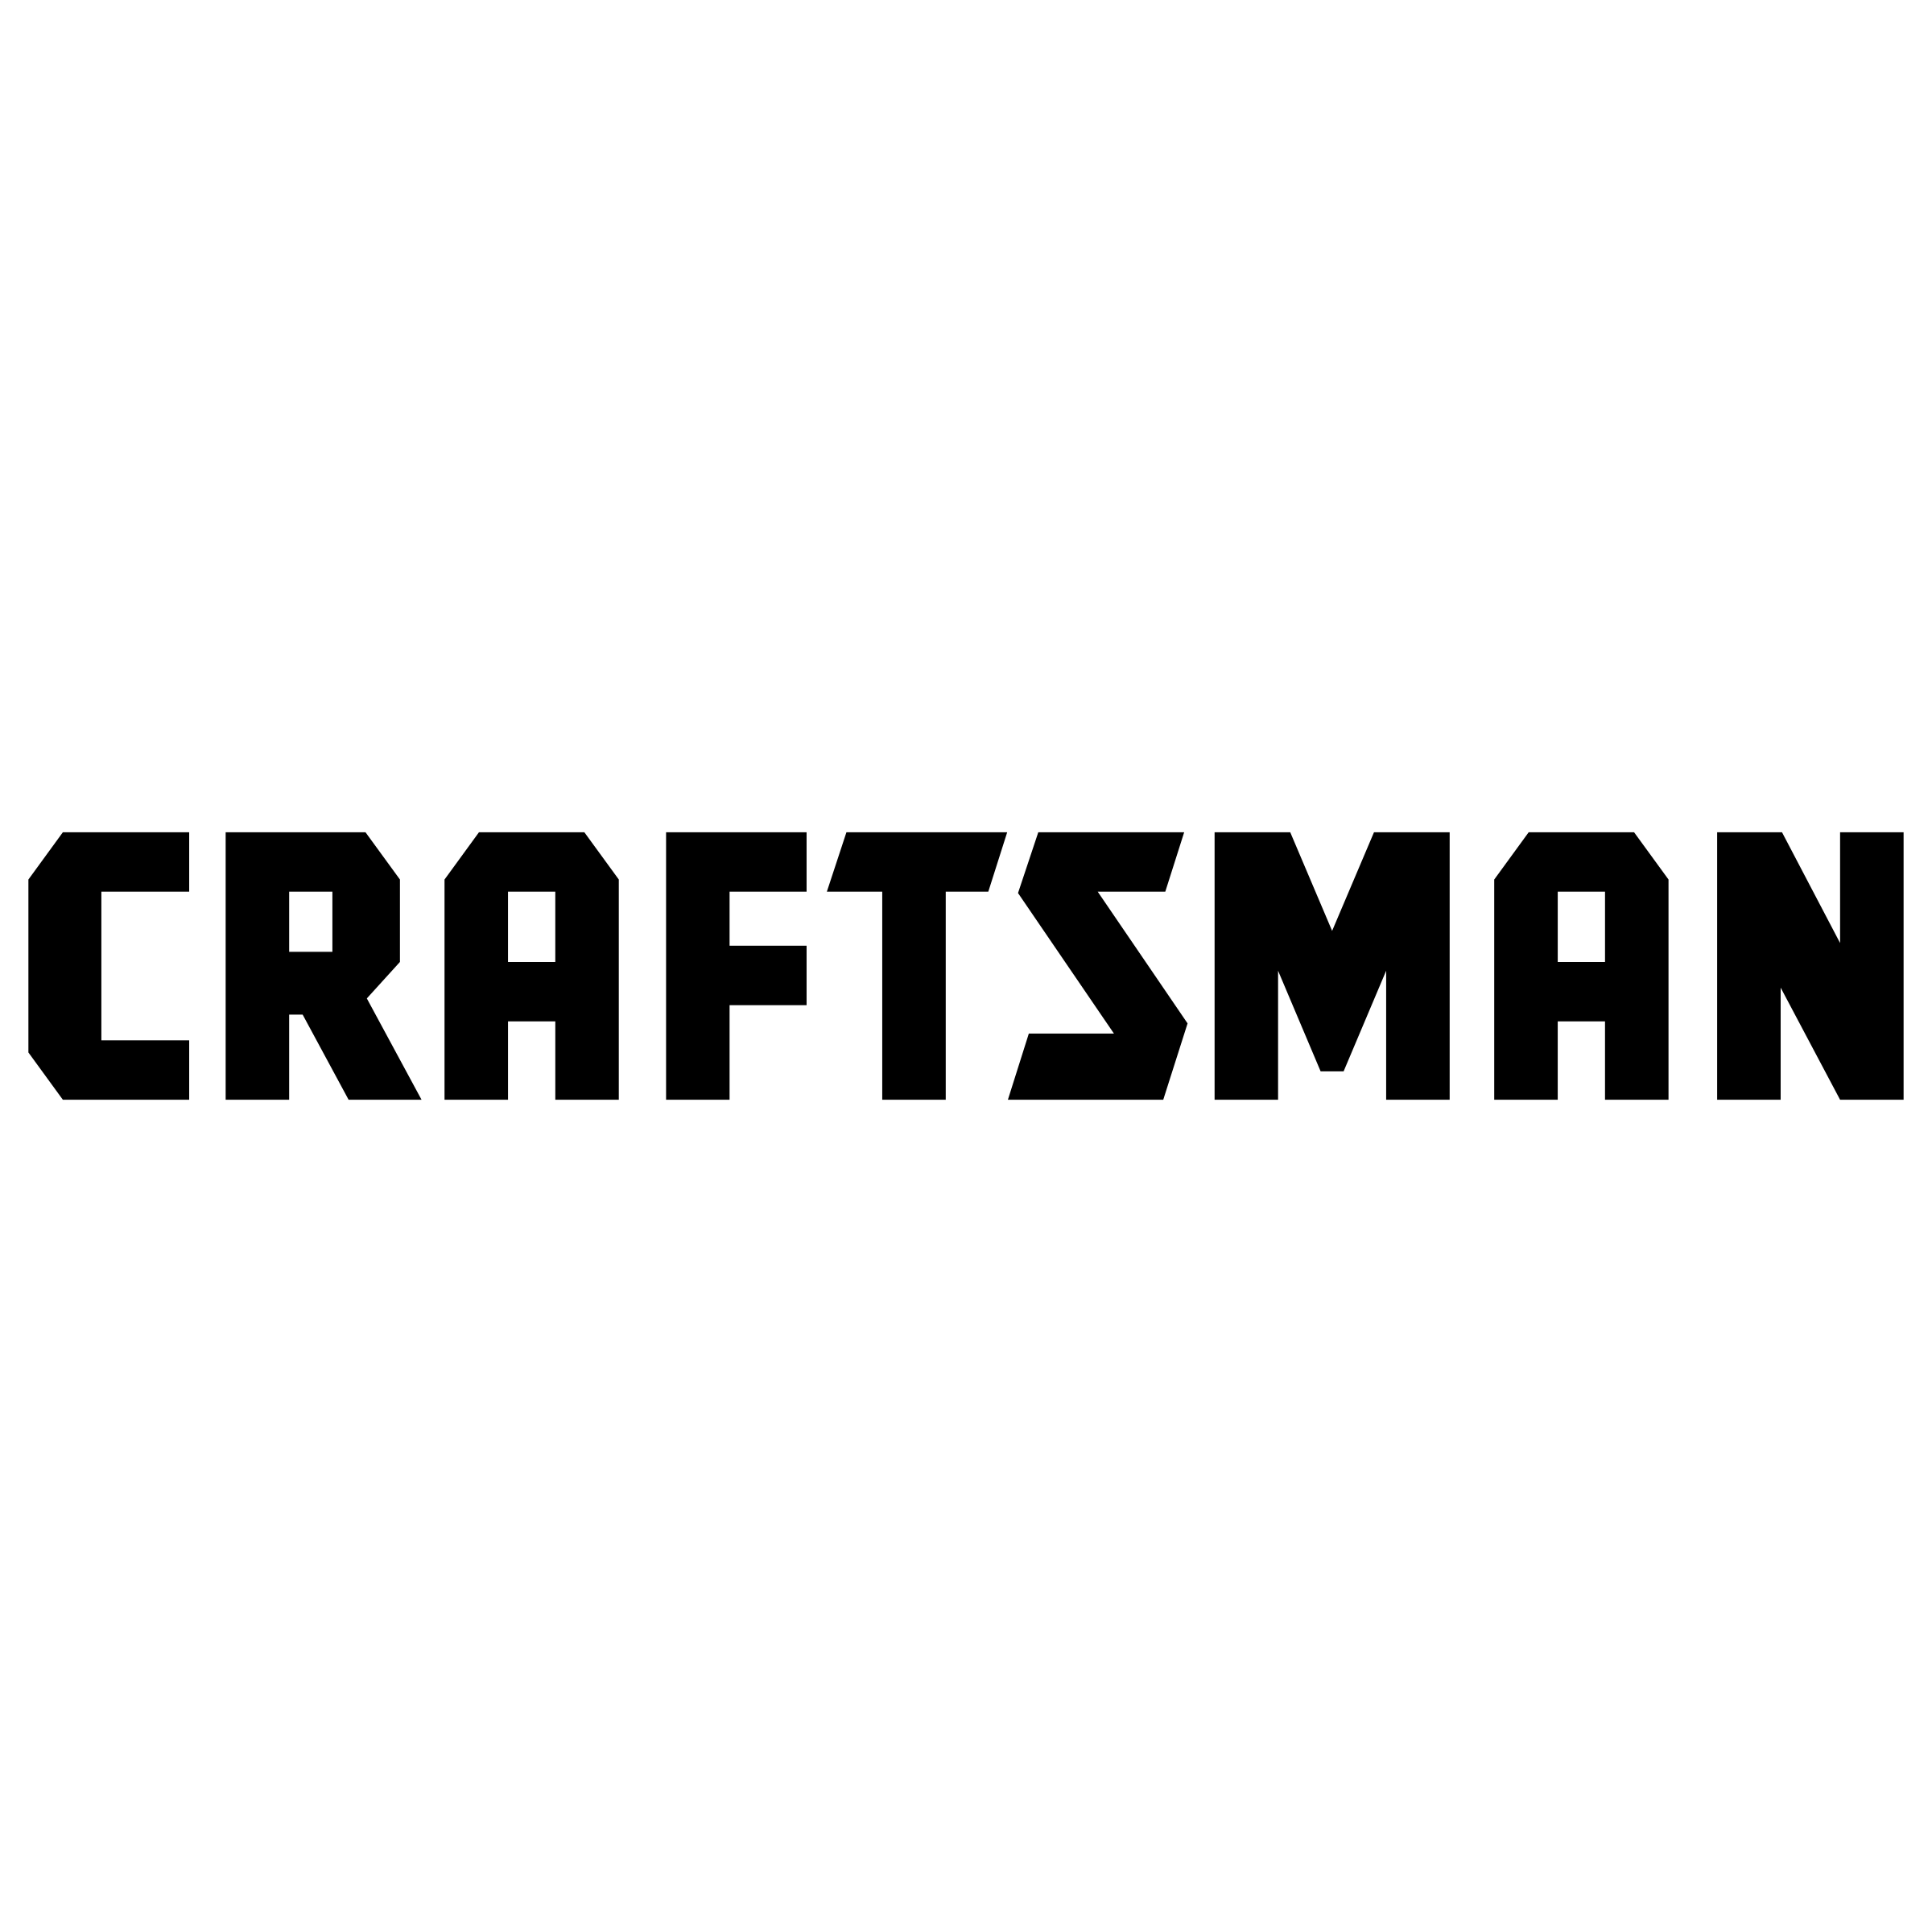 Craftsman Logo - Craftsman 4243 Logo PNG Transparent & SVG Vector - Freebie Supply